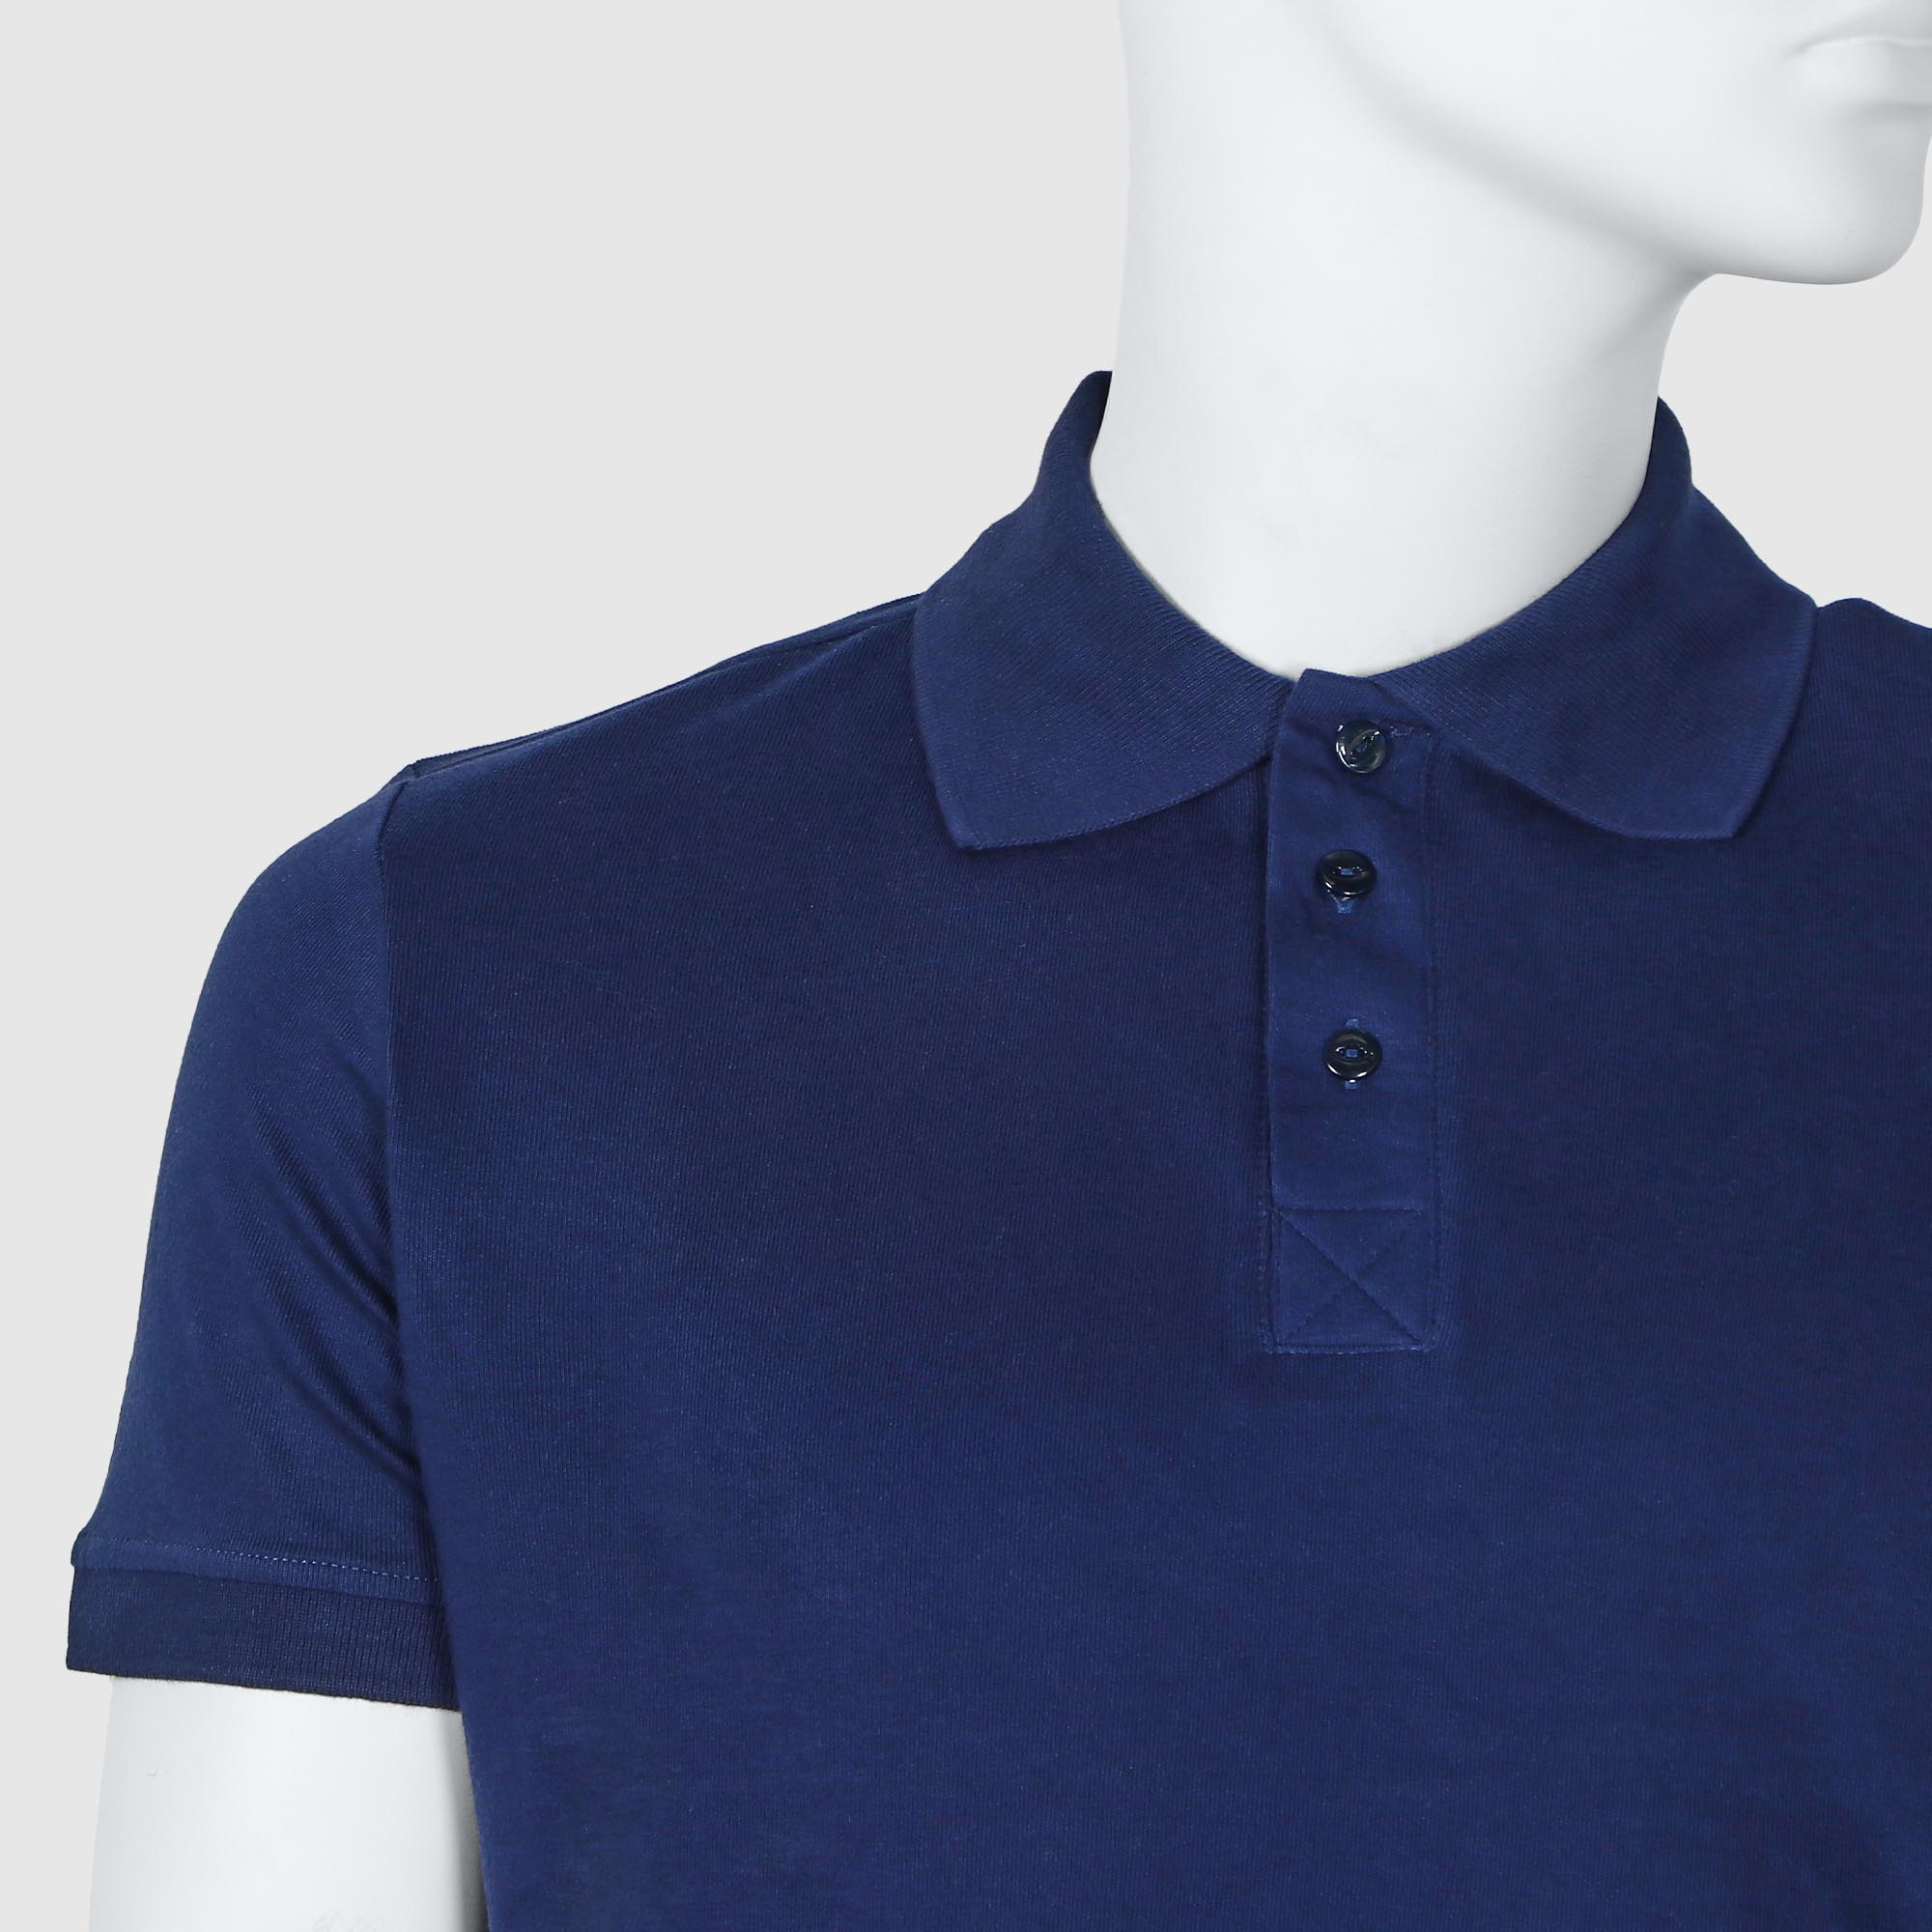 Мужская футболка-поло Diva Teks синяя (DTD-10), цвет синий, размер 46-48 - фото 3